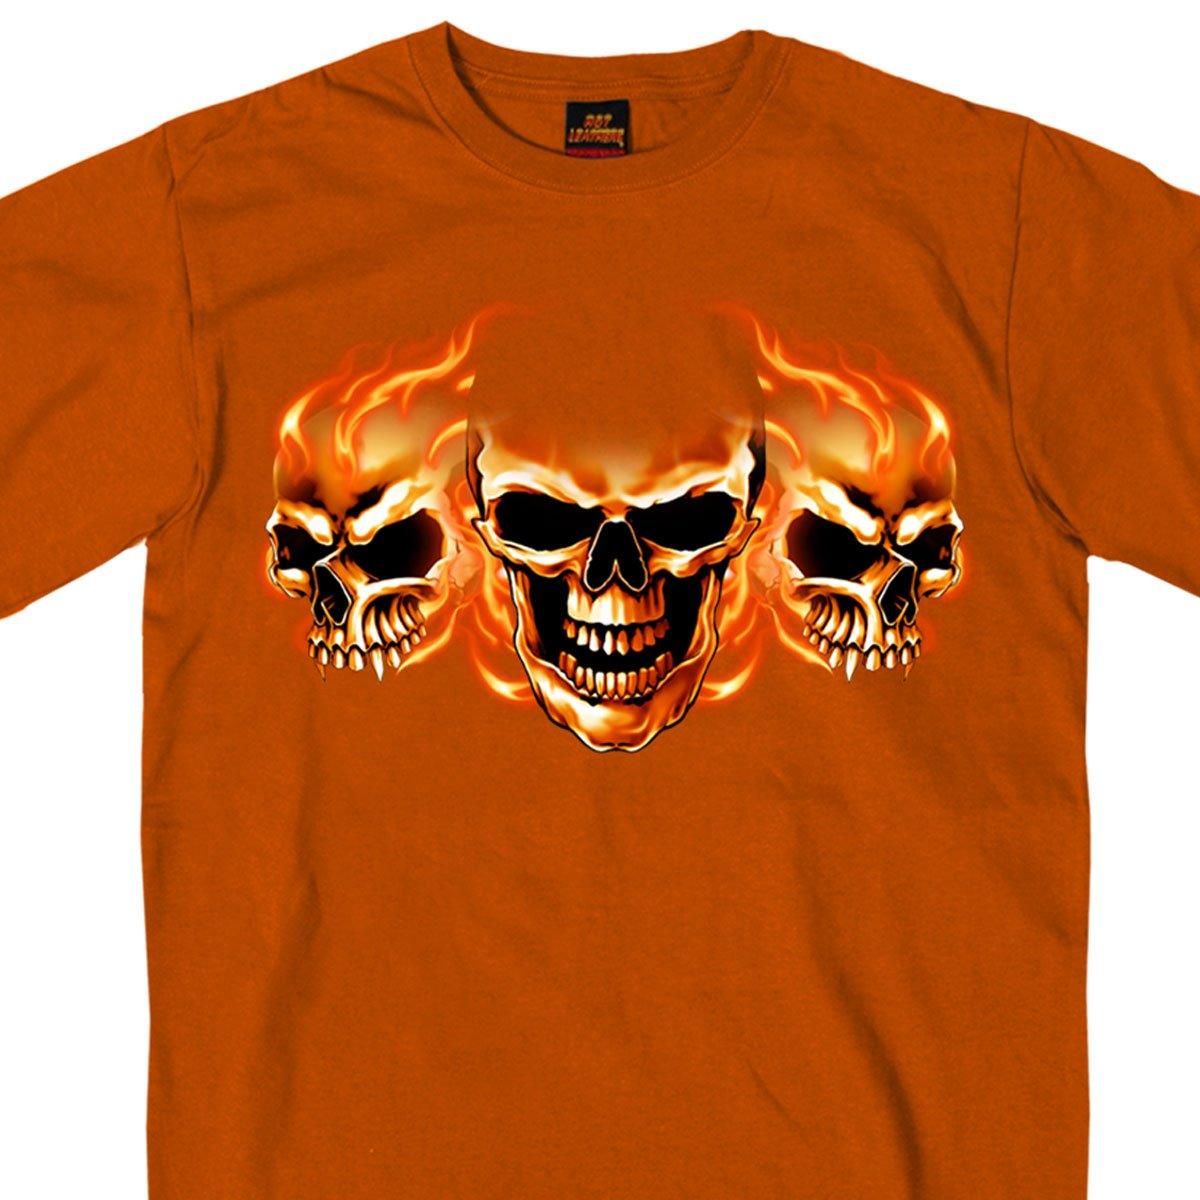 Hot Leathers Men's Three Skulls Texas Orange T-Shirt, Orange - American Legend Rider